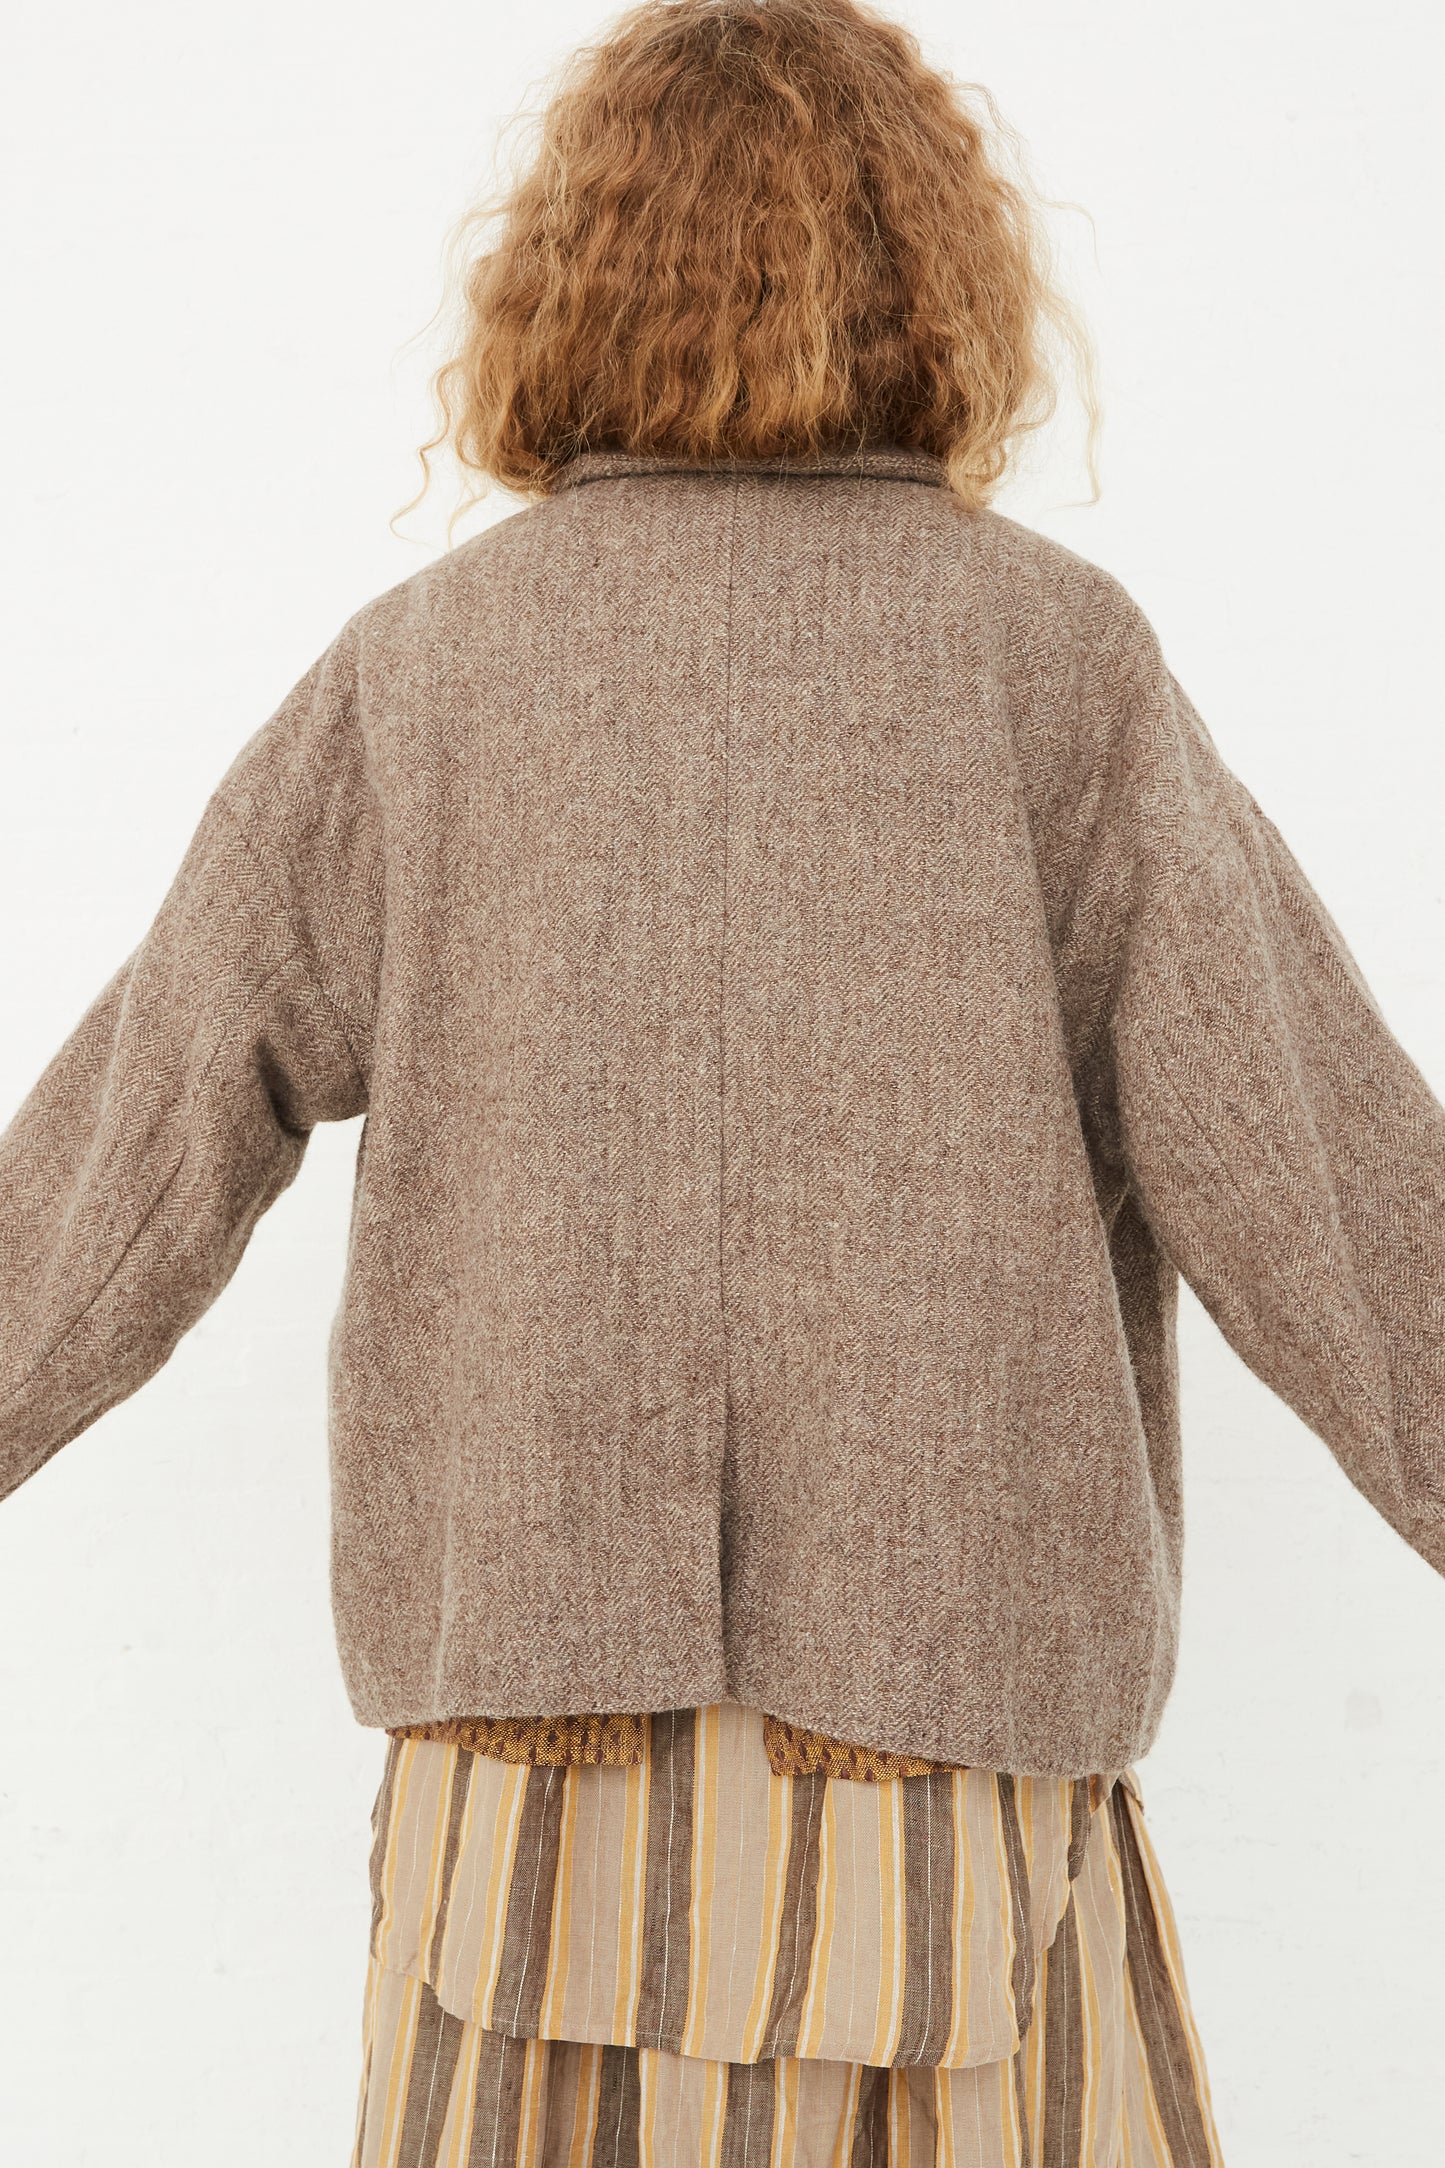 The back of a model wearing an oversized Ichi Antiquités Wool Herringbone Jacket in Mocha.